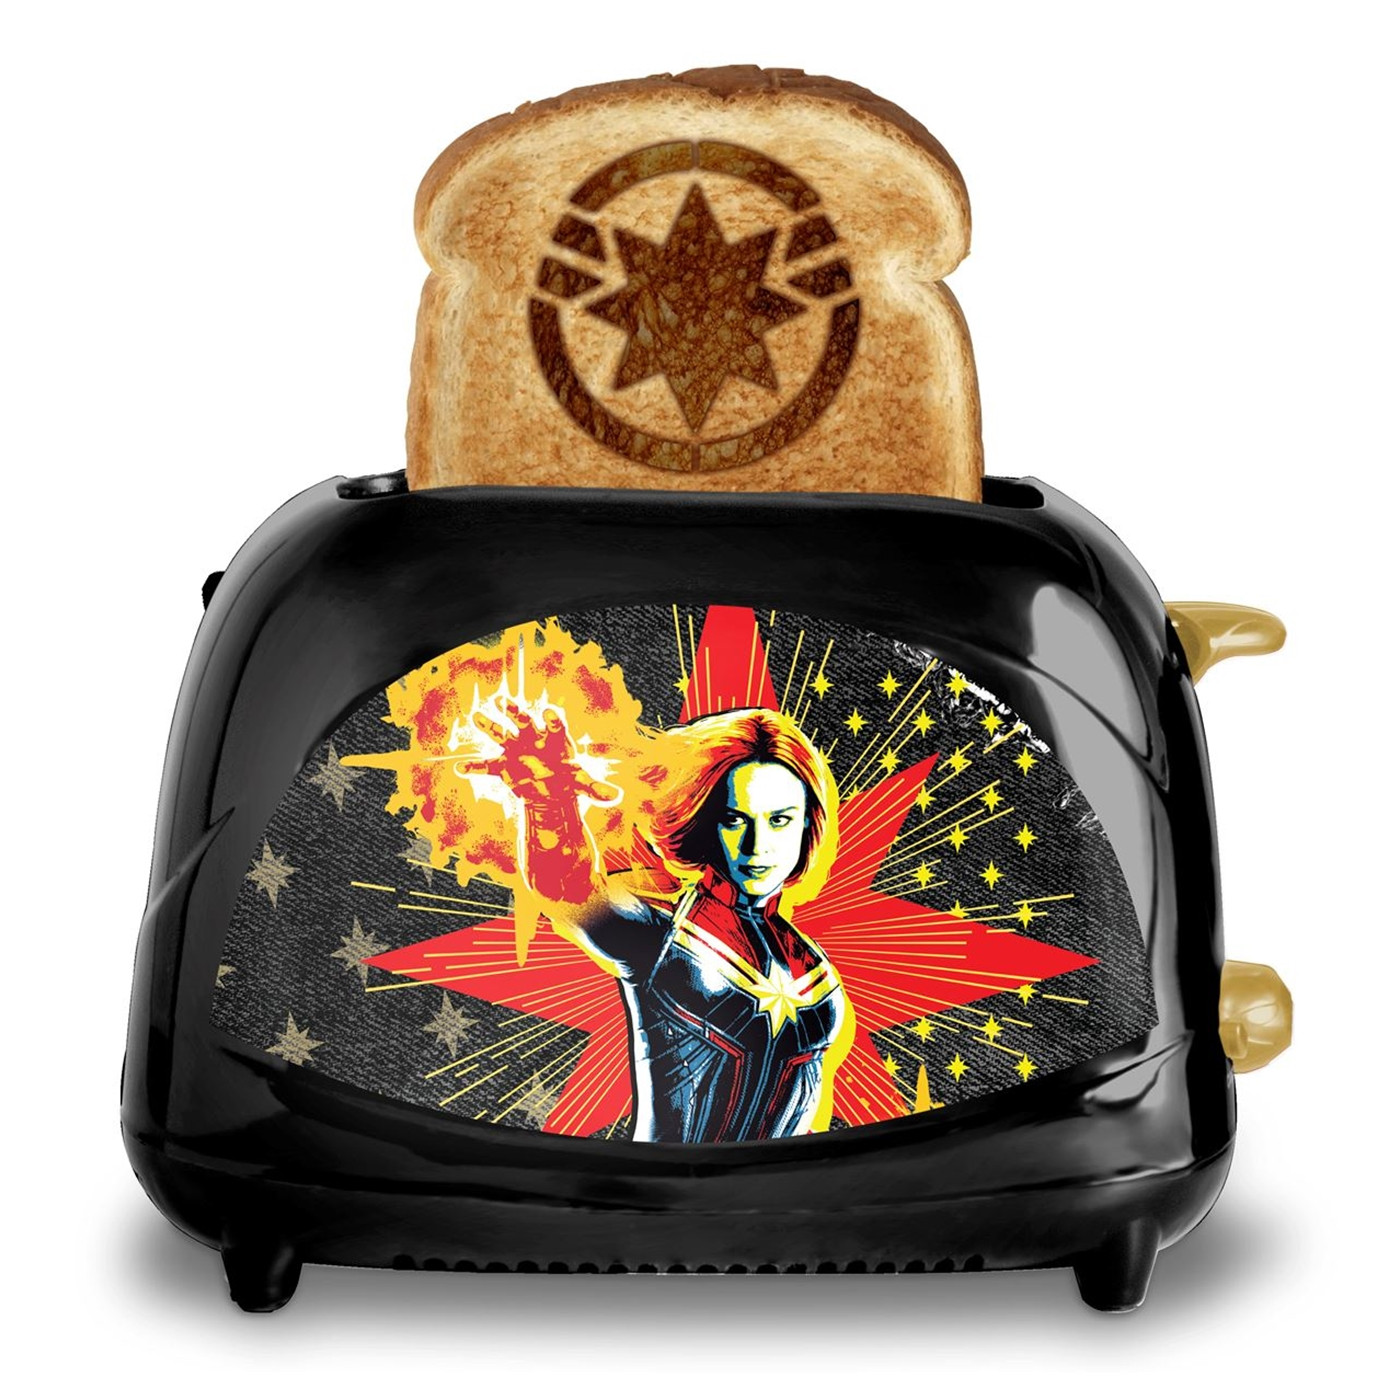 Captain Marvel Toaster